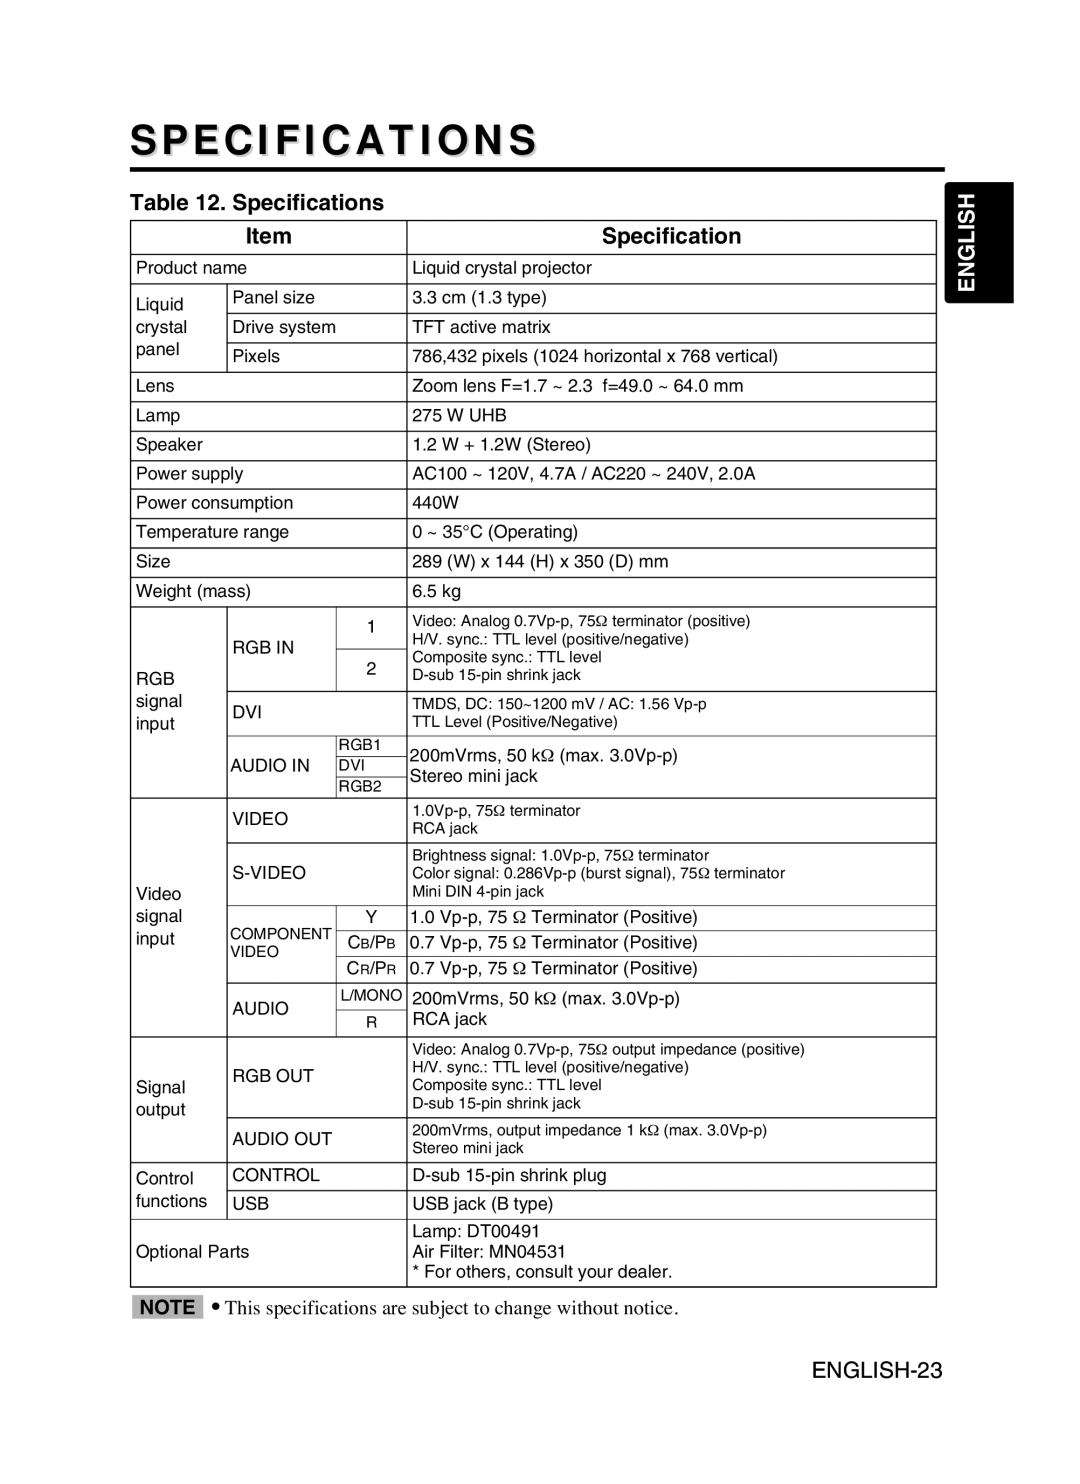 Proxima ASA DP6870 manual Specifications, English 